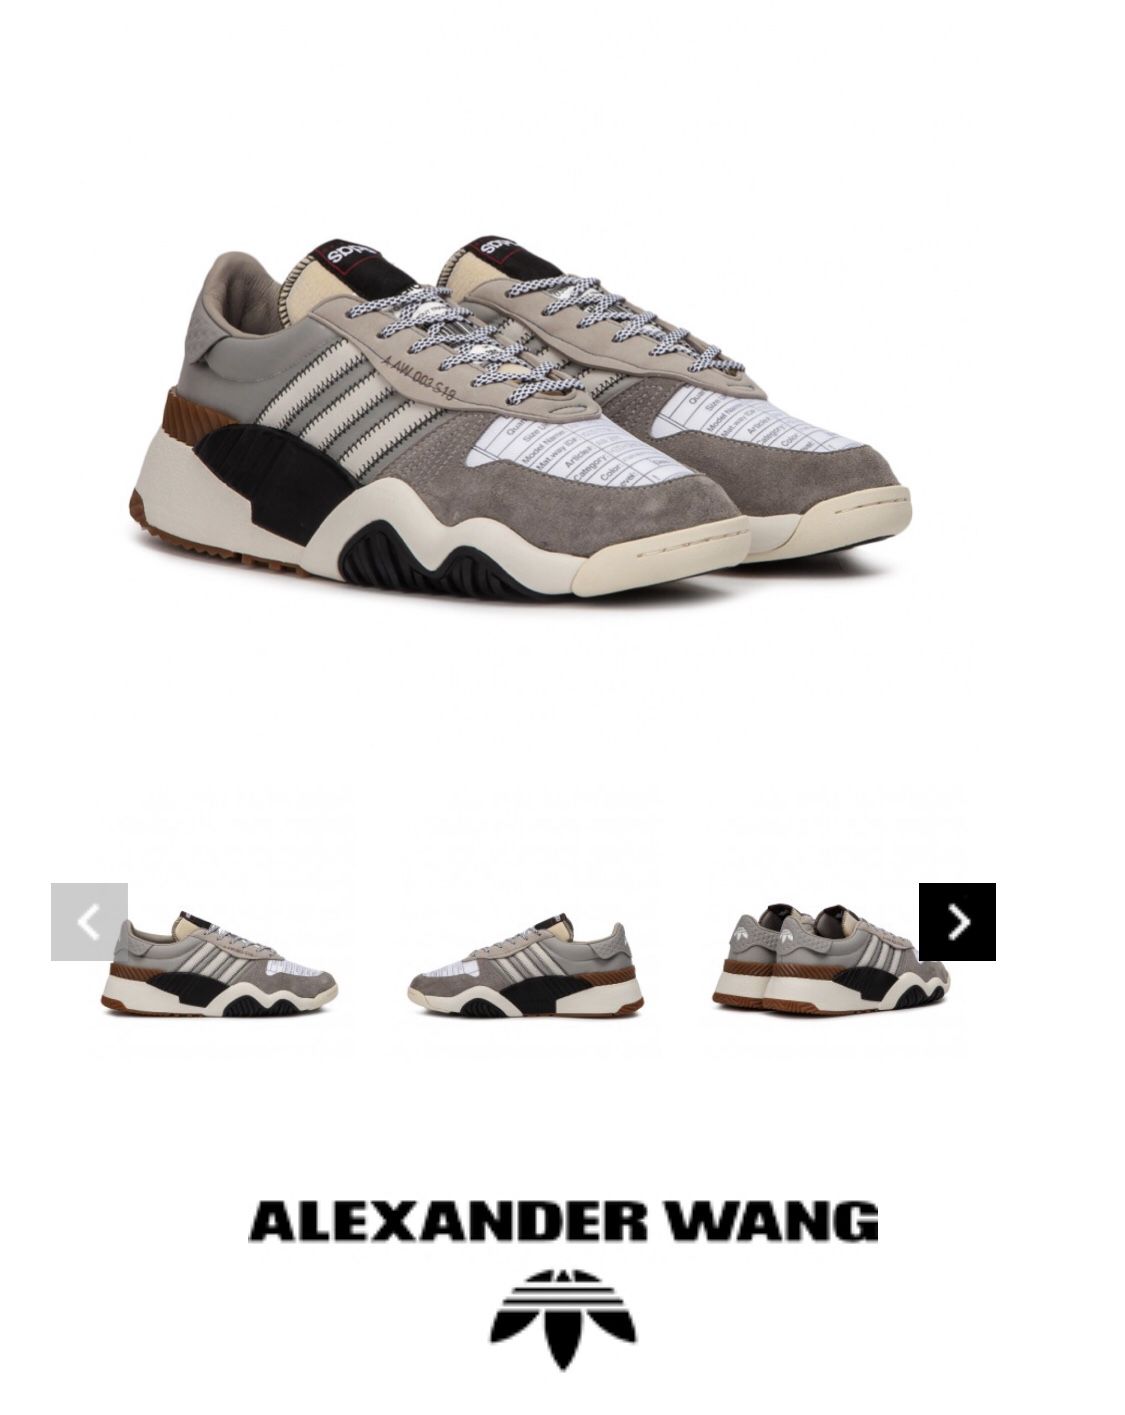 Alexander Wang x Adidas sneakers